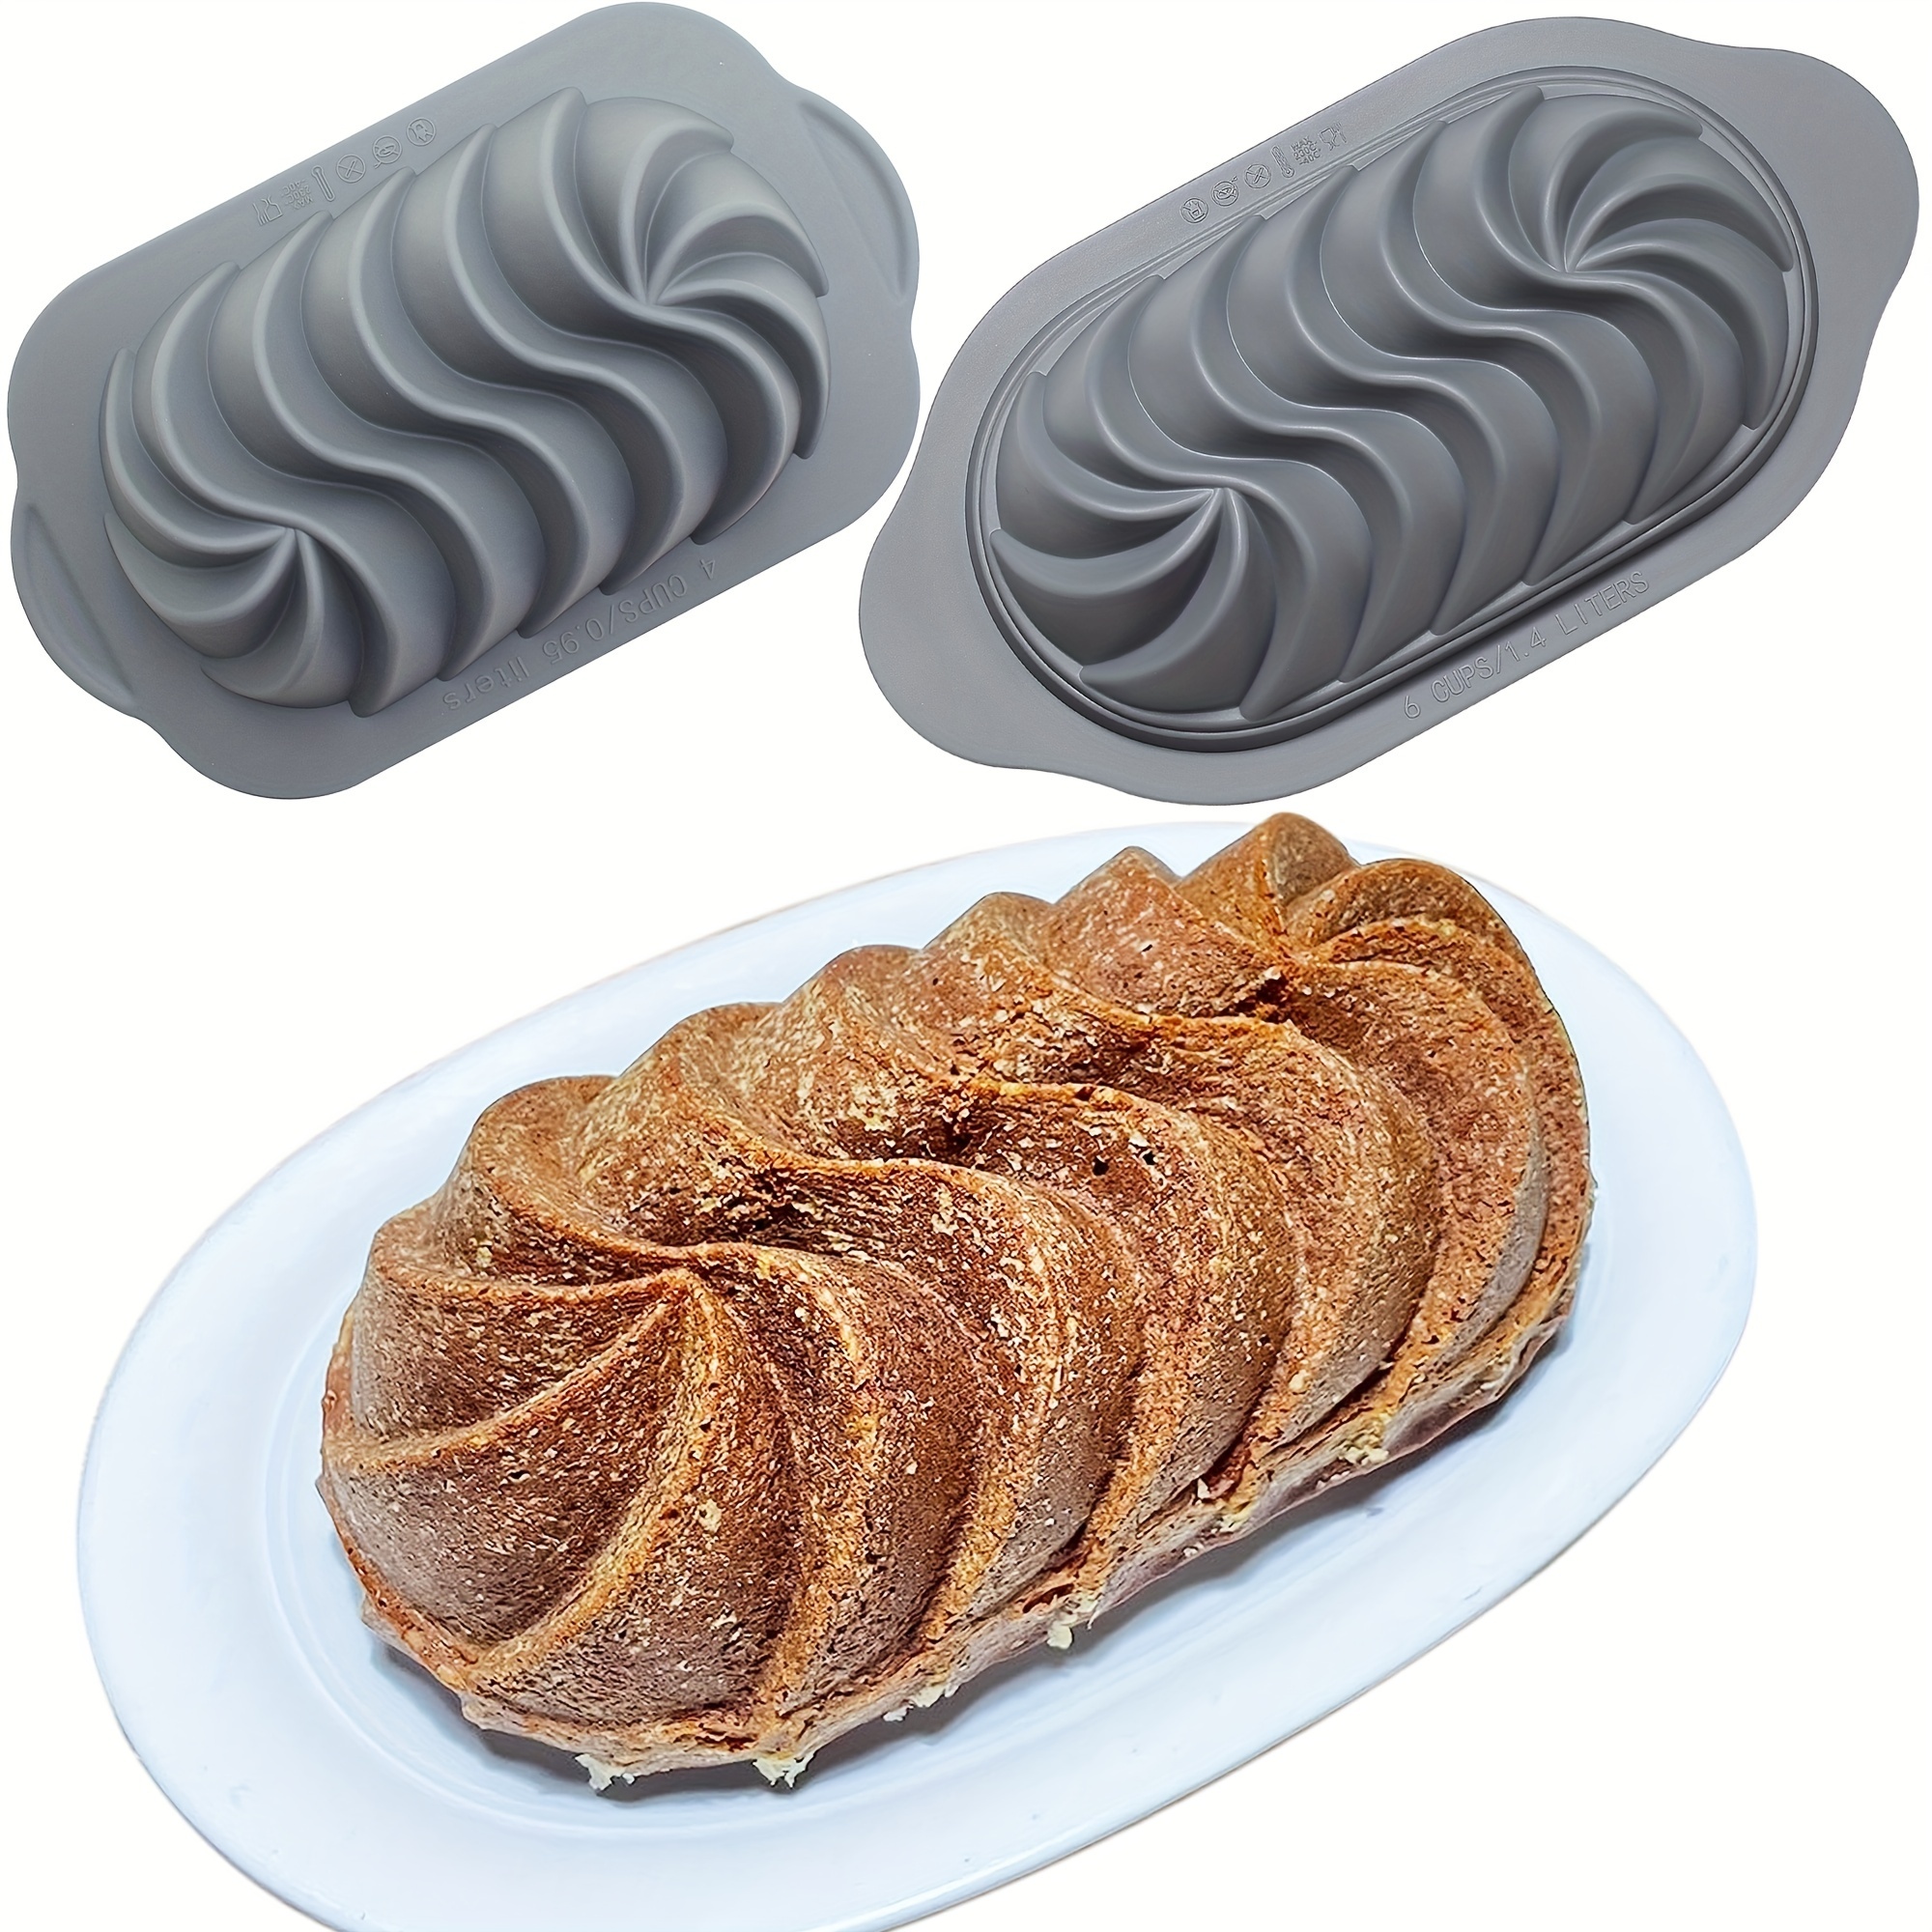 Silicone Cake Pan With Spiral Design, Food Grade Non-stick